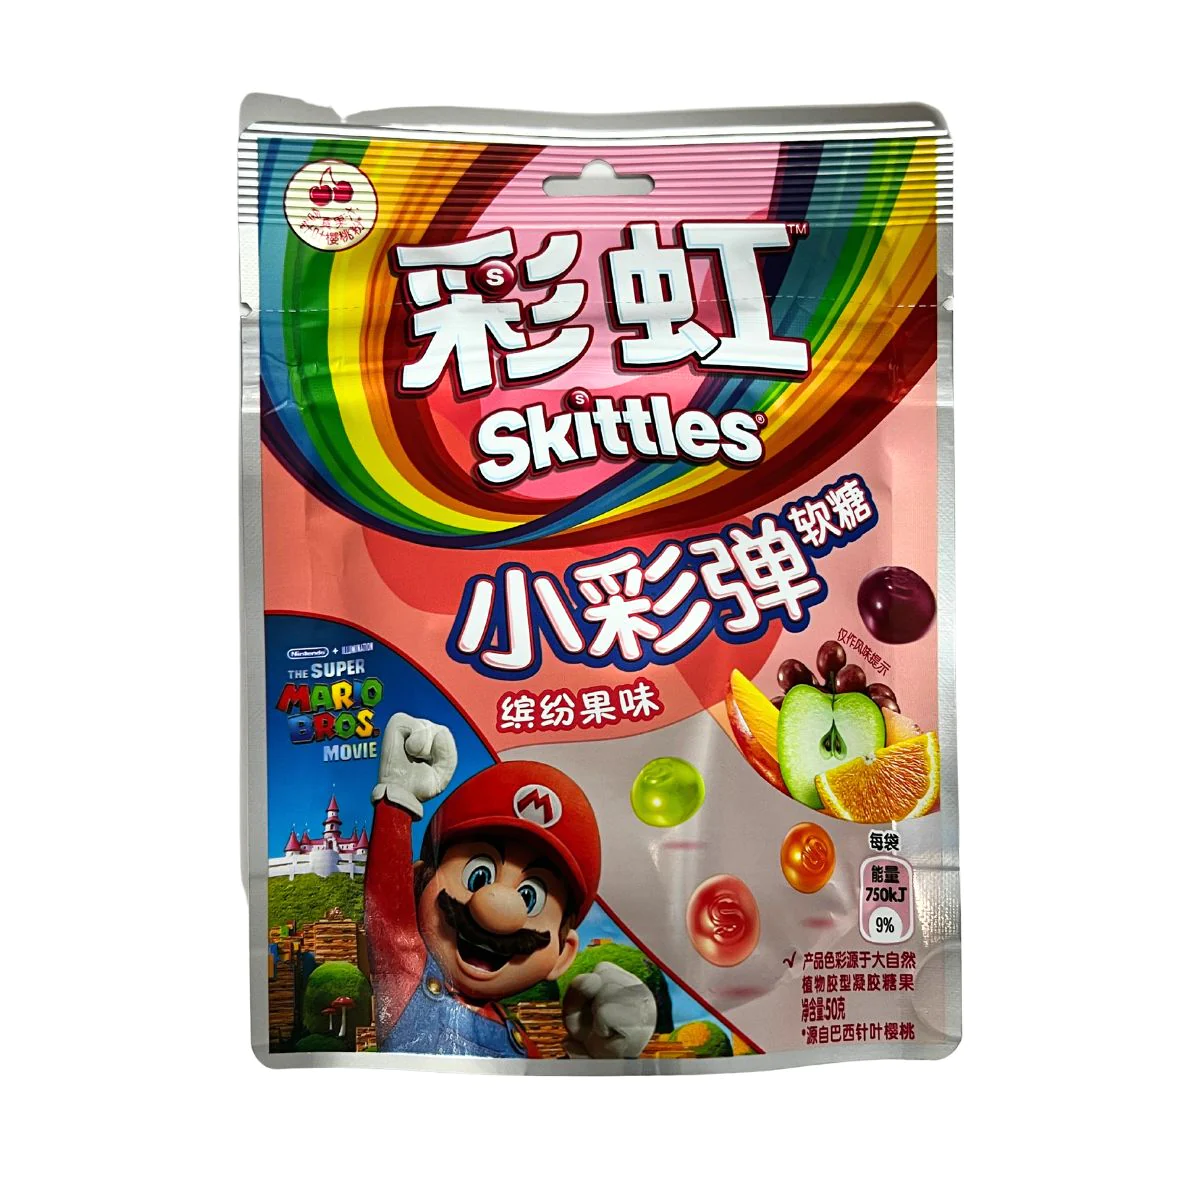 Wrigley's Skittles Brand Teams Up With Fruit Ninja Game – FAB News